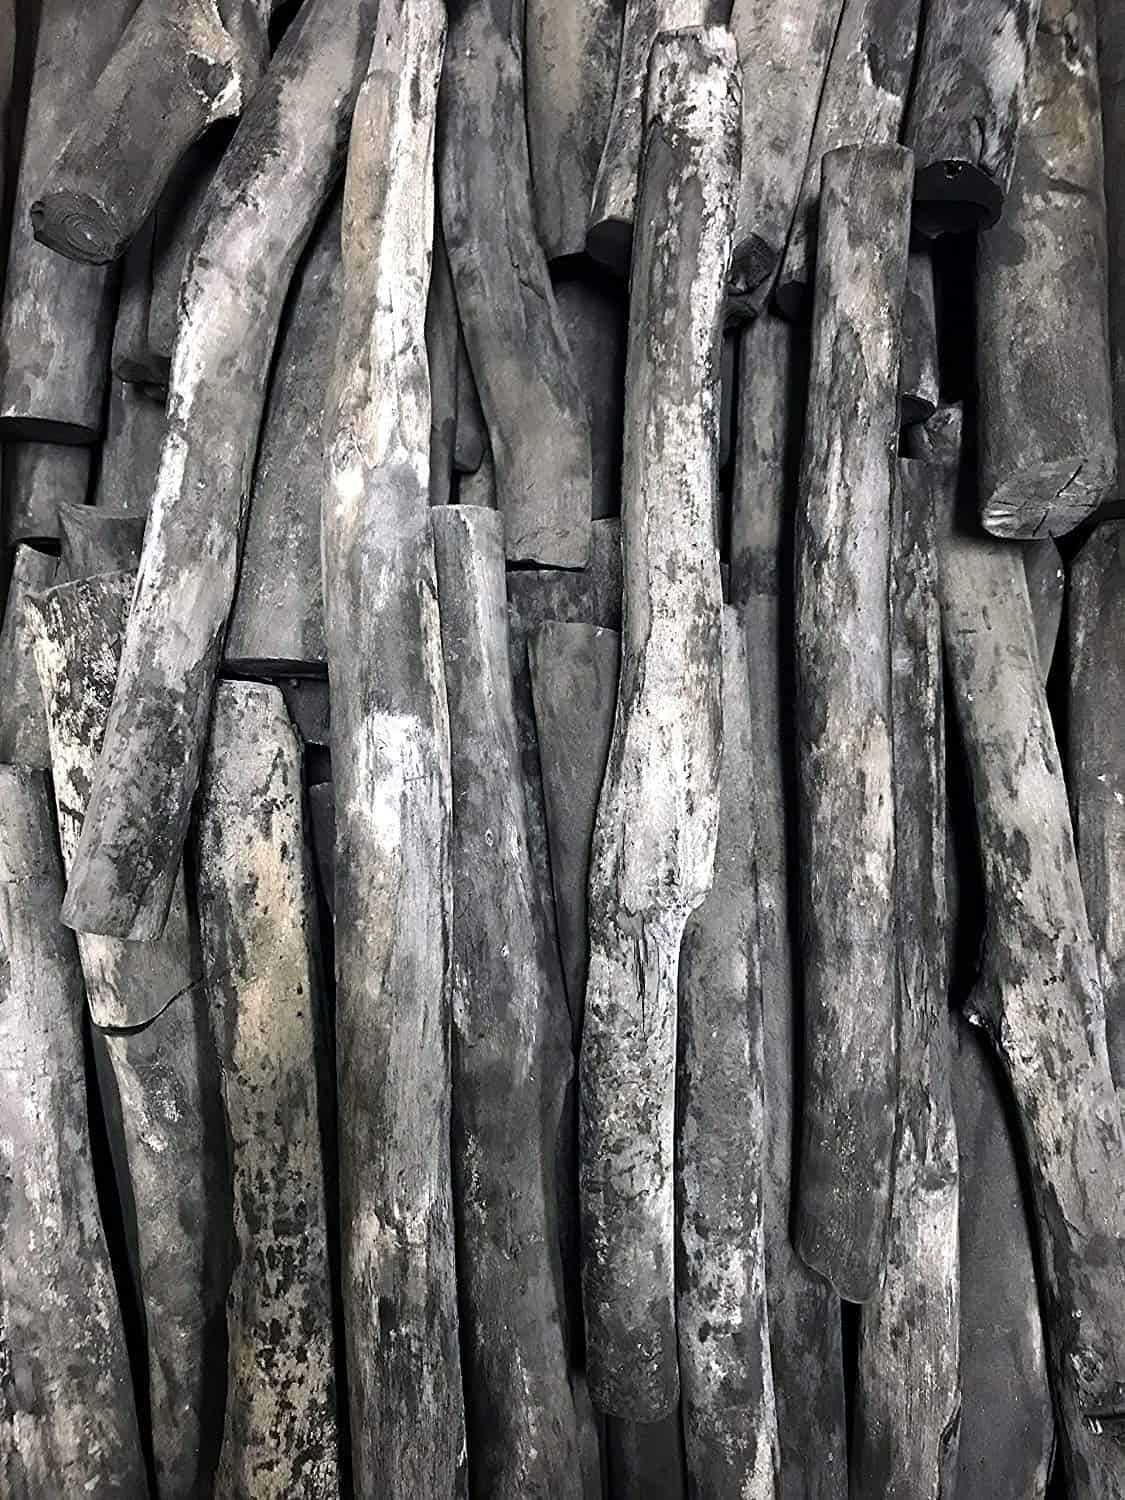 Restaurant-grade-binchotan-charcoal